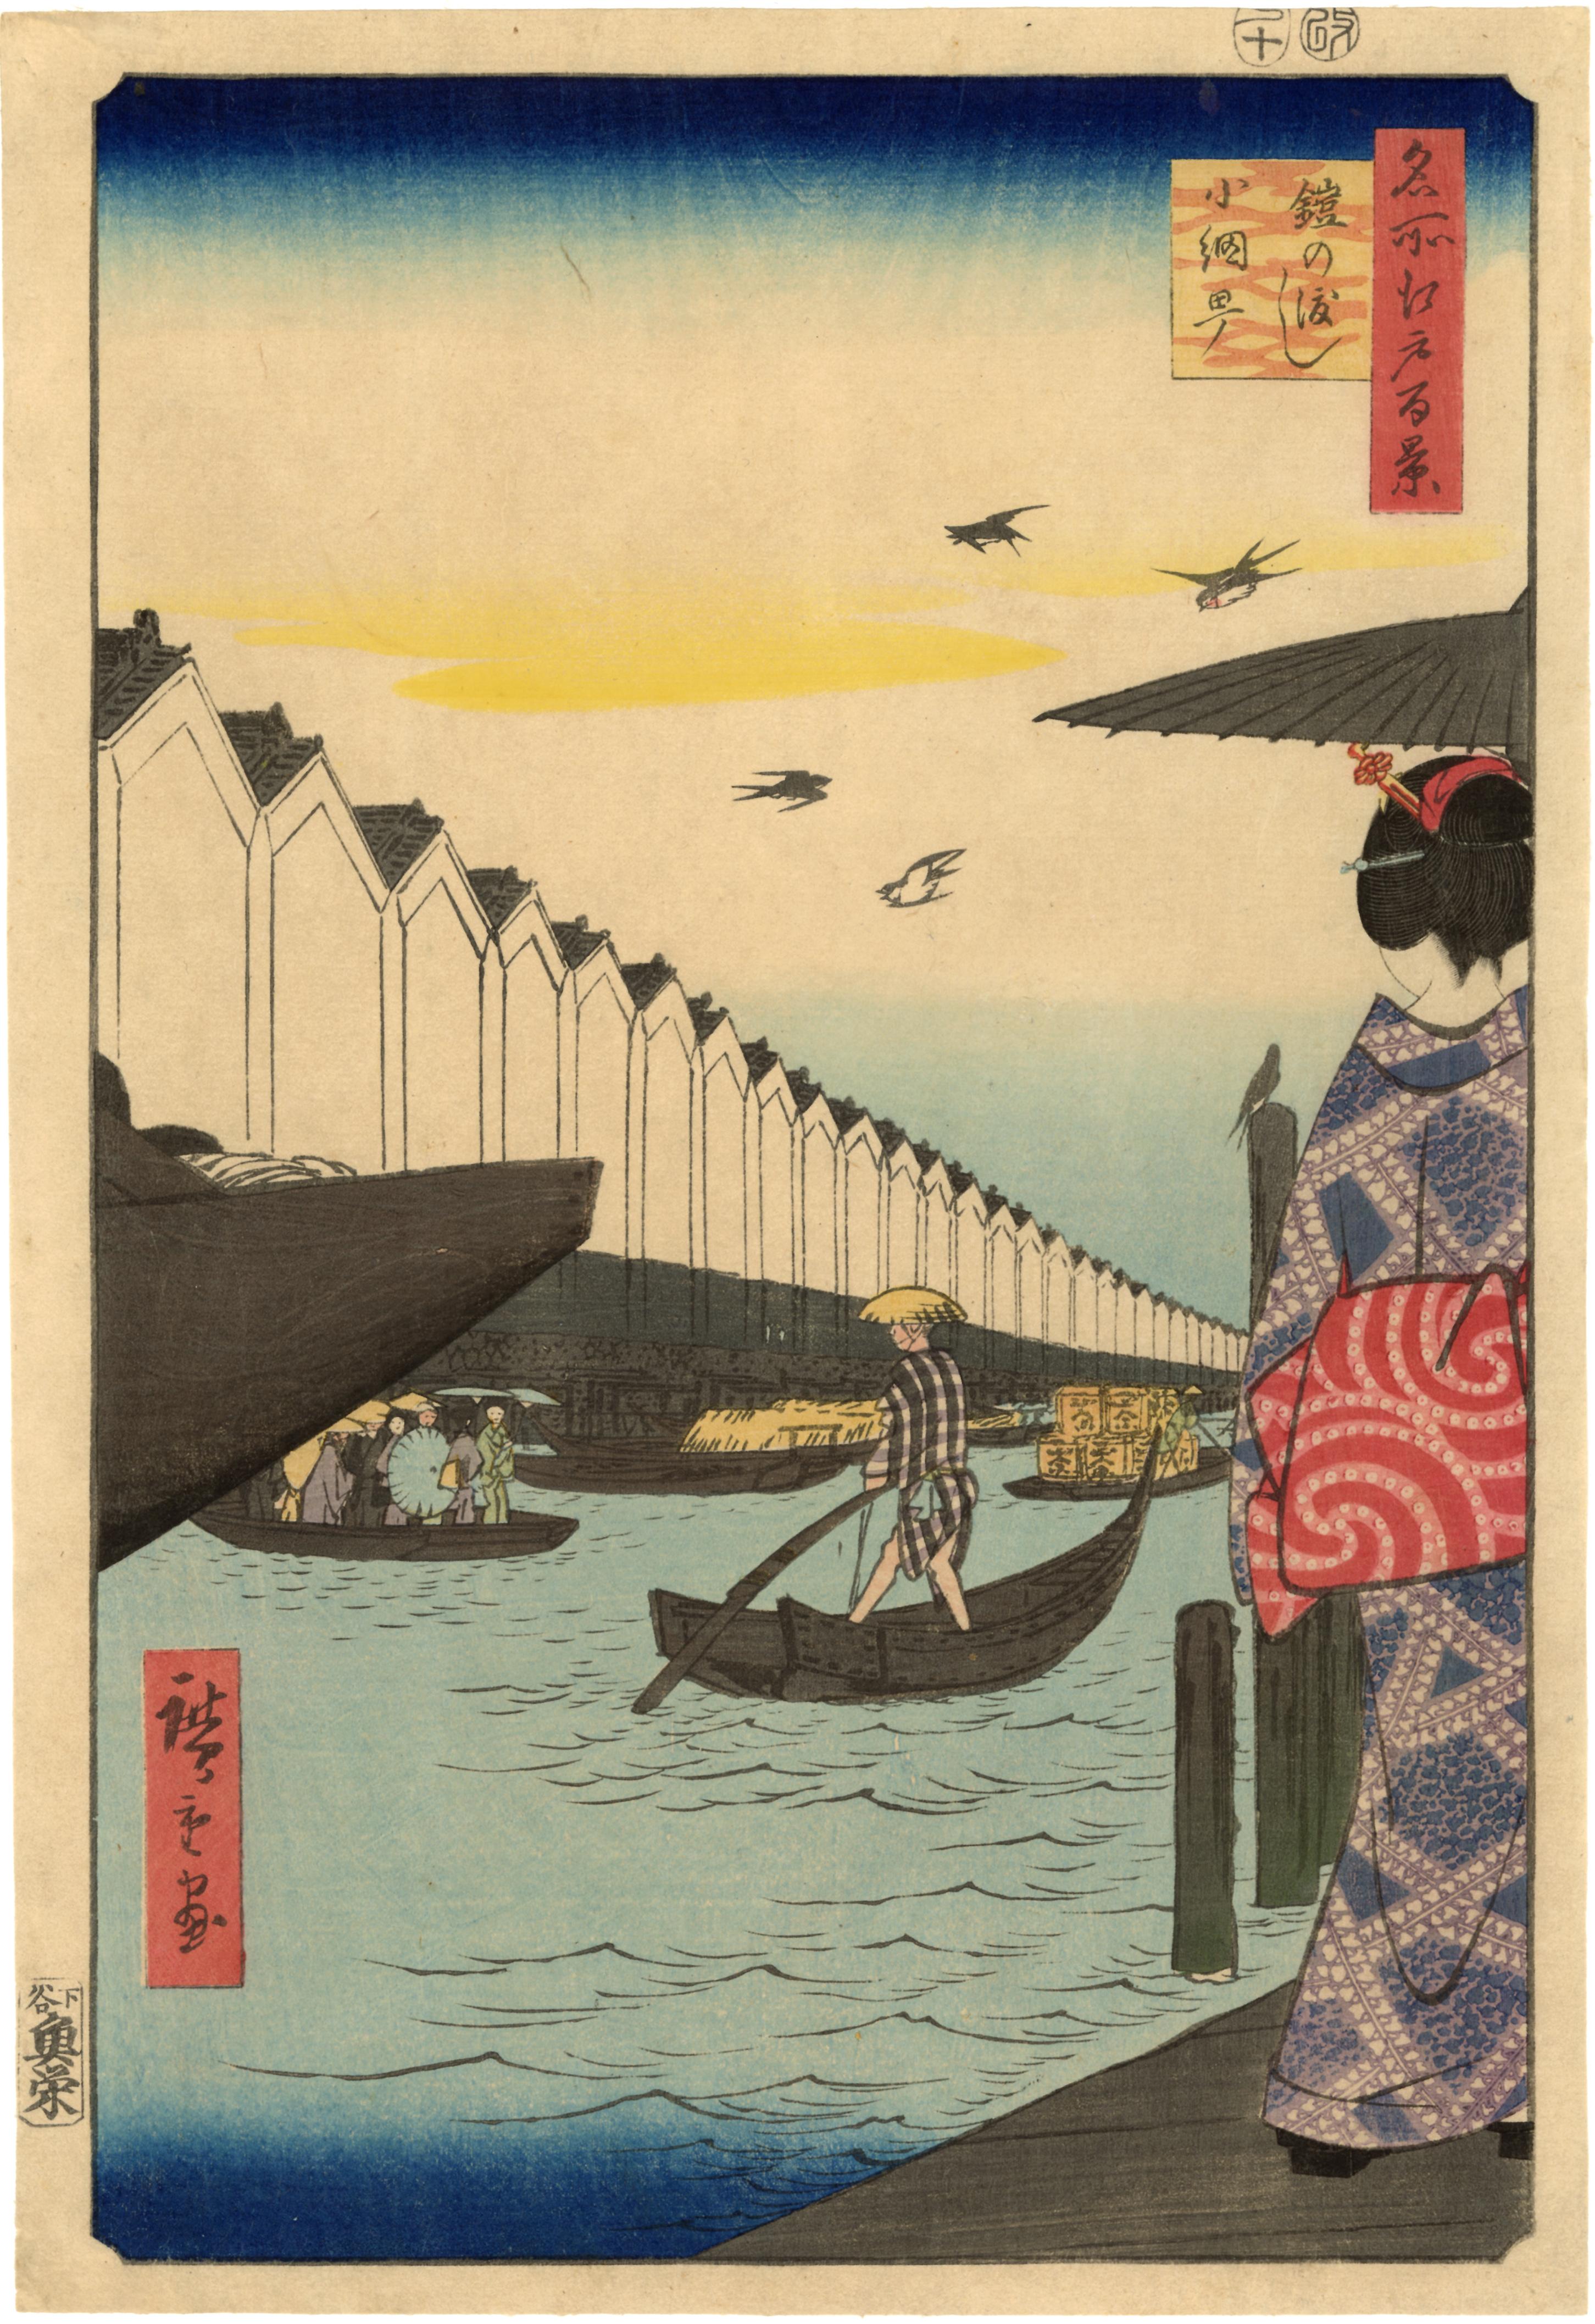 Yoroi Ferry from 100 Famous Views of Edo